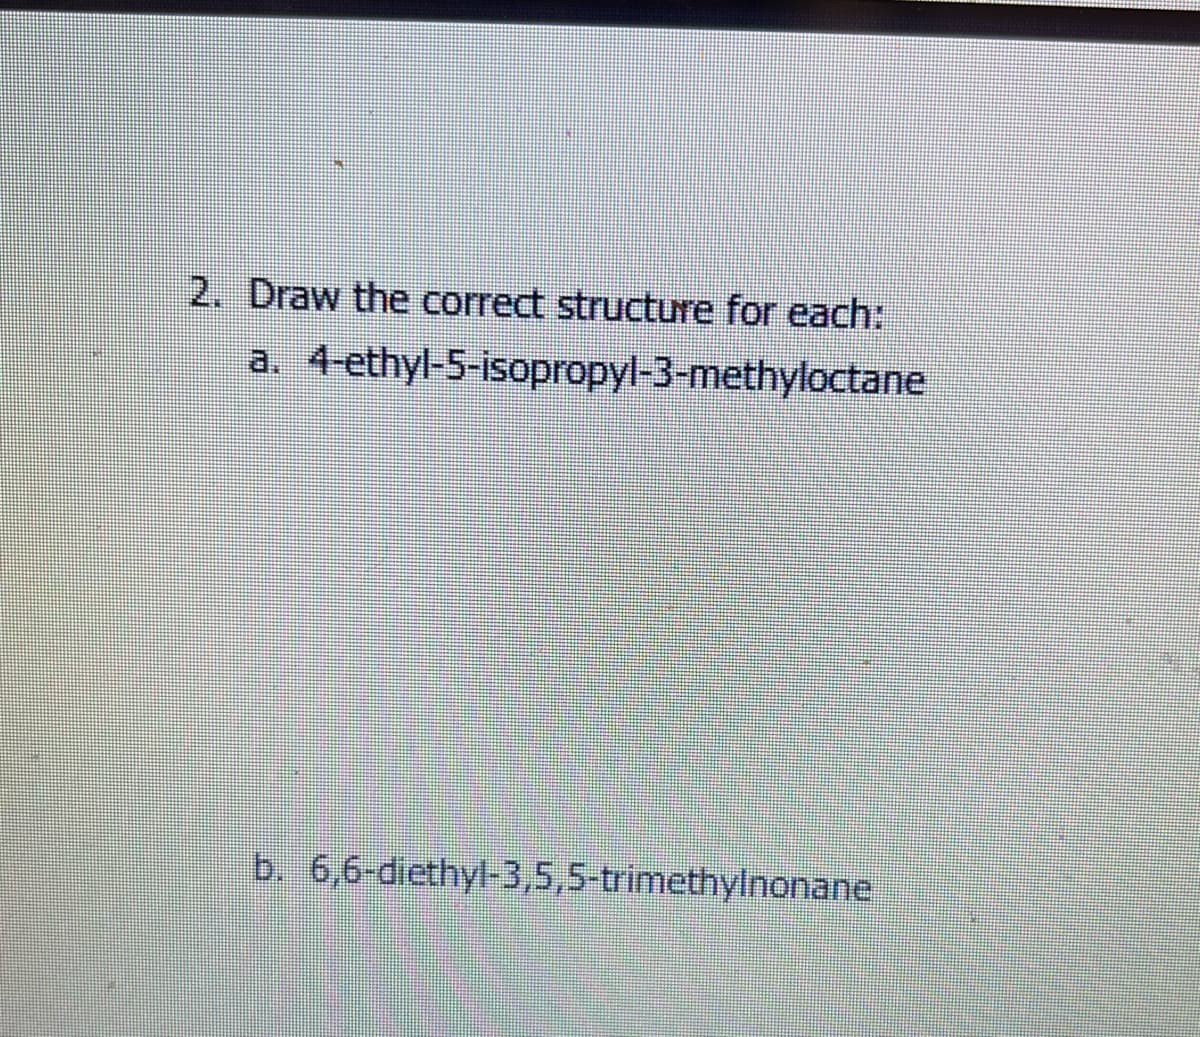 2. Draw the correct structure for each:
a. 4-ethyl-5-isopropyl-3-methyloctane
b. 6,6-diethyl-3,5,5-trimethylnonane